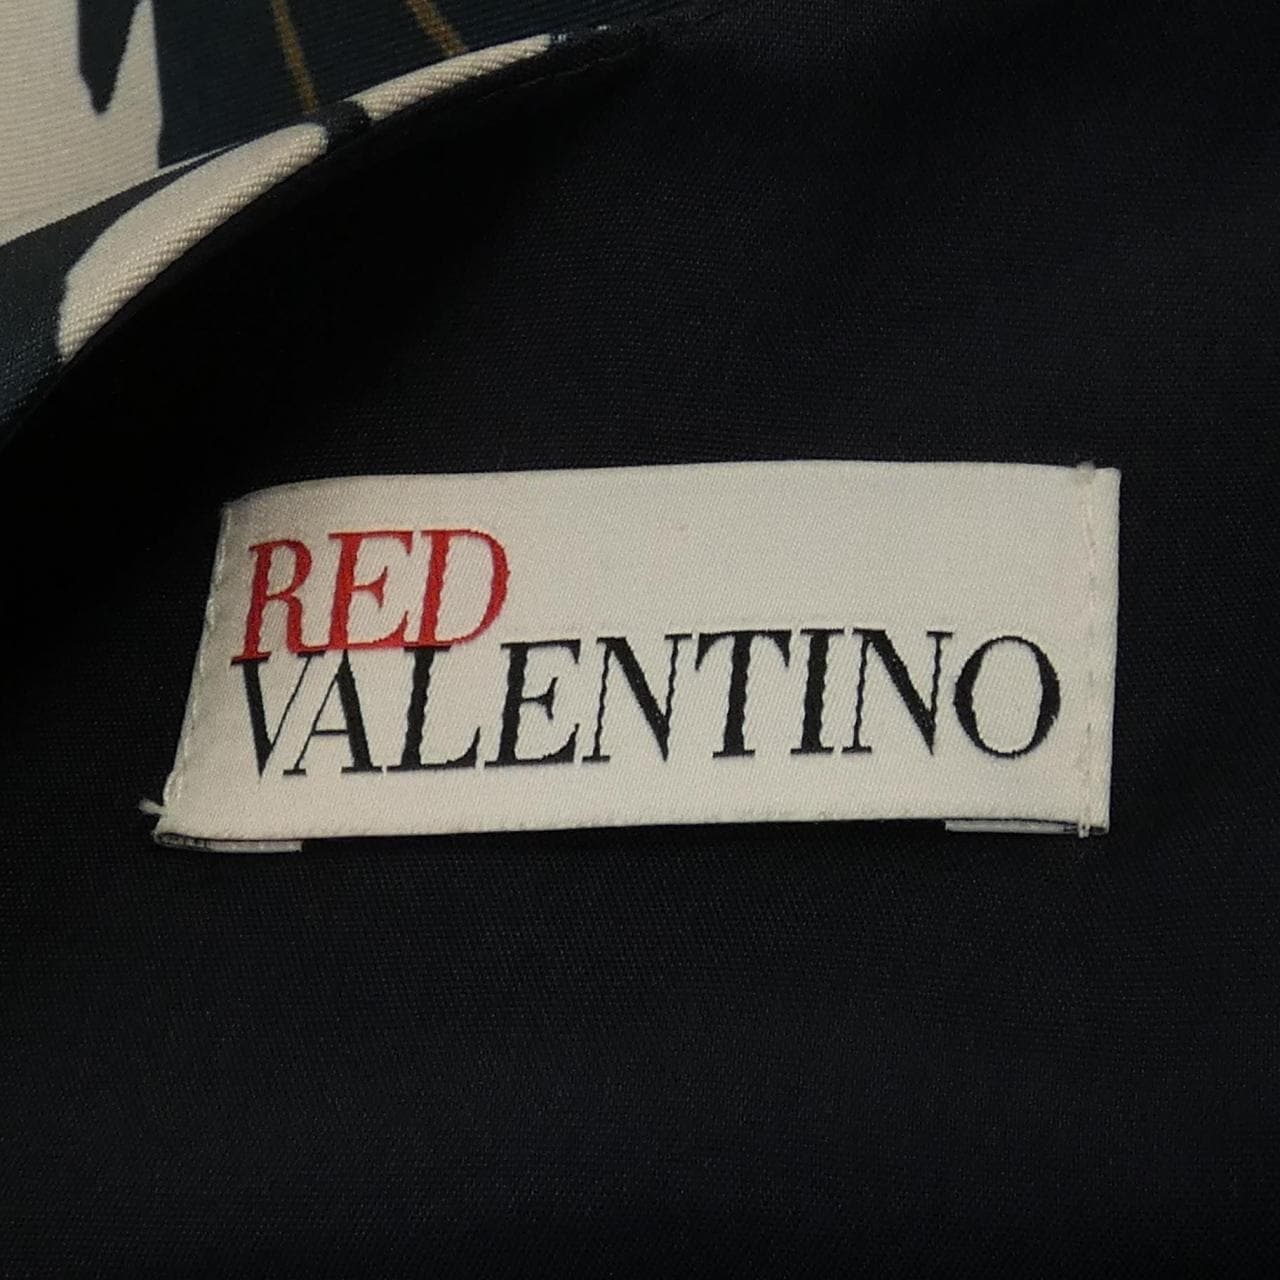 RED VALENTINO VALENTINO 連衣裙